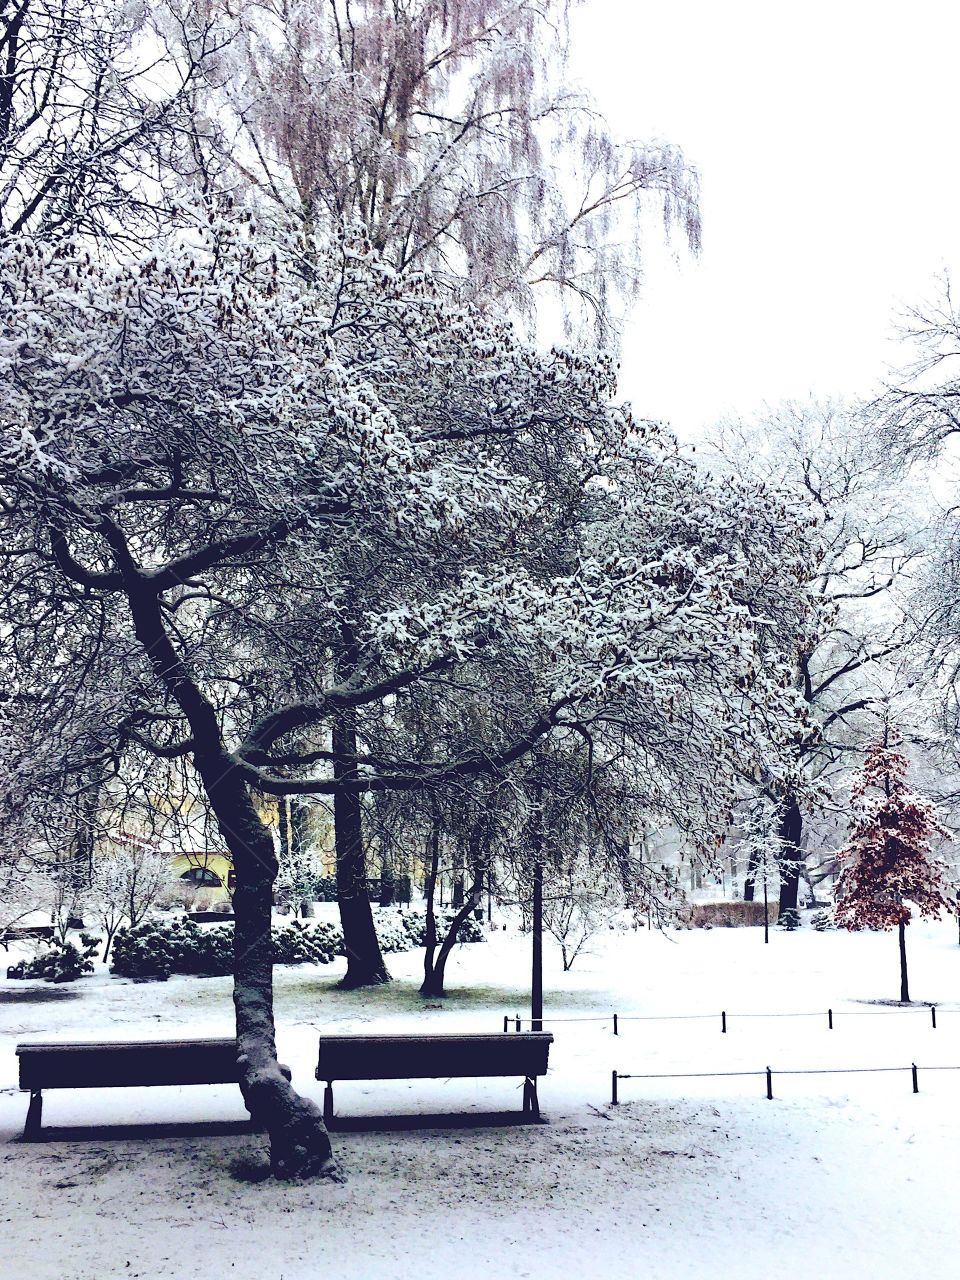 Wintertime in Bernardinai Gardens in Vilnius, Lithuania